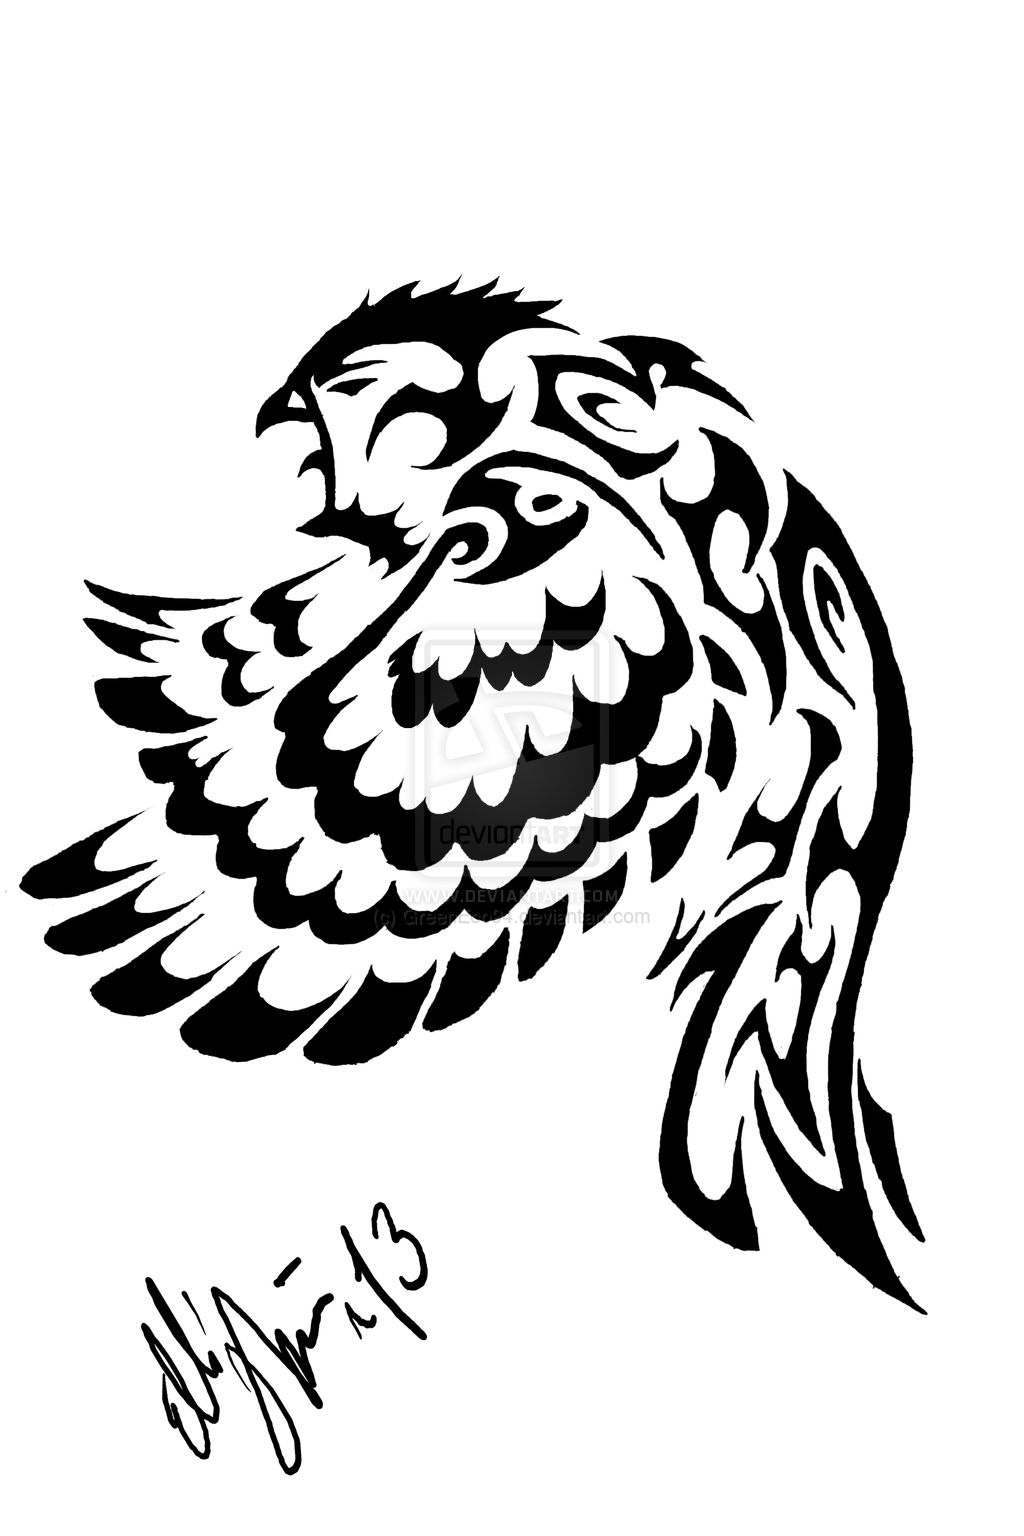 deviantART: More Like Tribal owl tattoo desing by GreenEco94